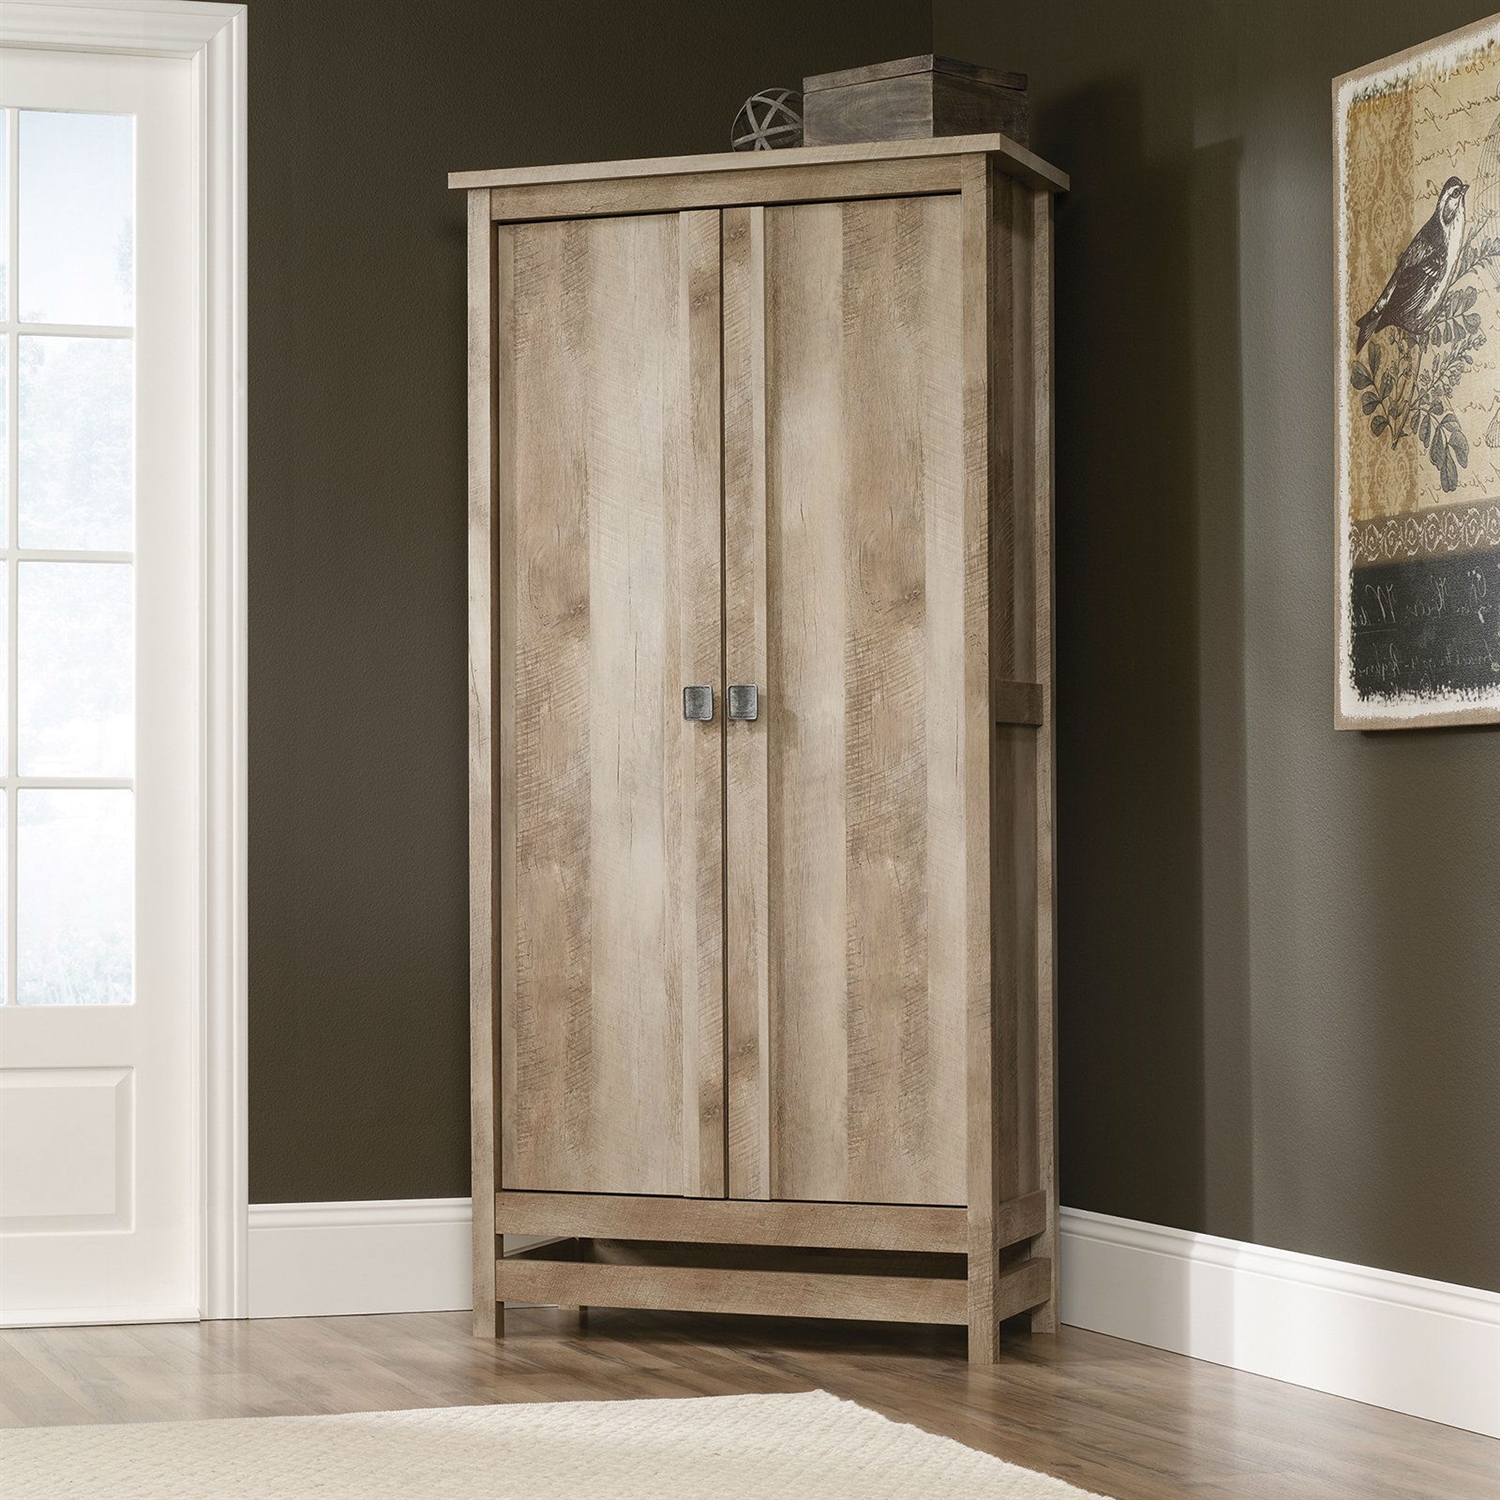 Cottage Style Wardrobe Armoire Storage Cabinet in Light Oak Wood Finish